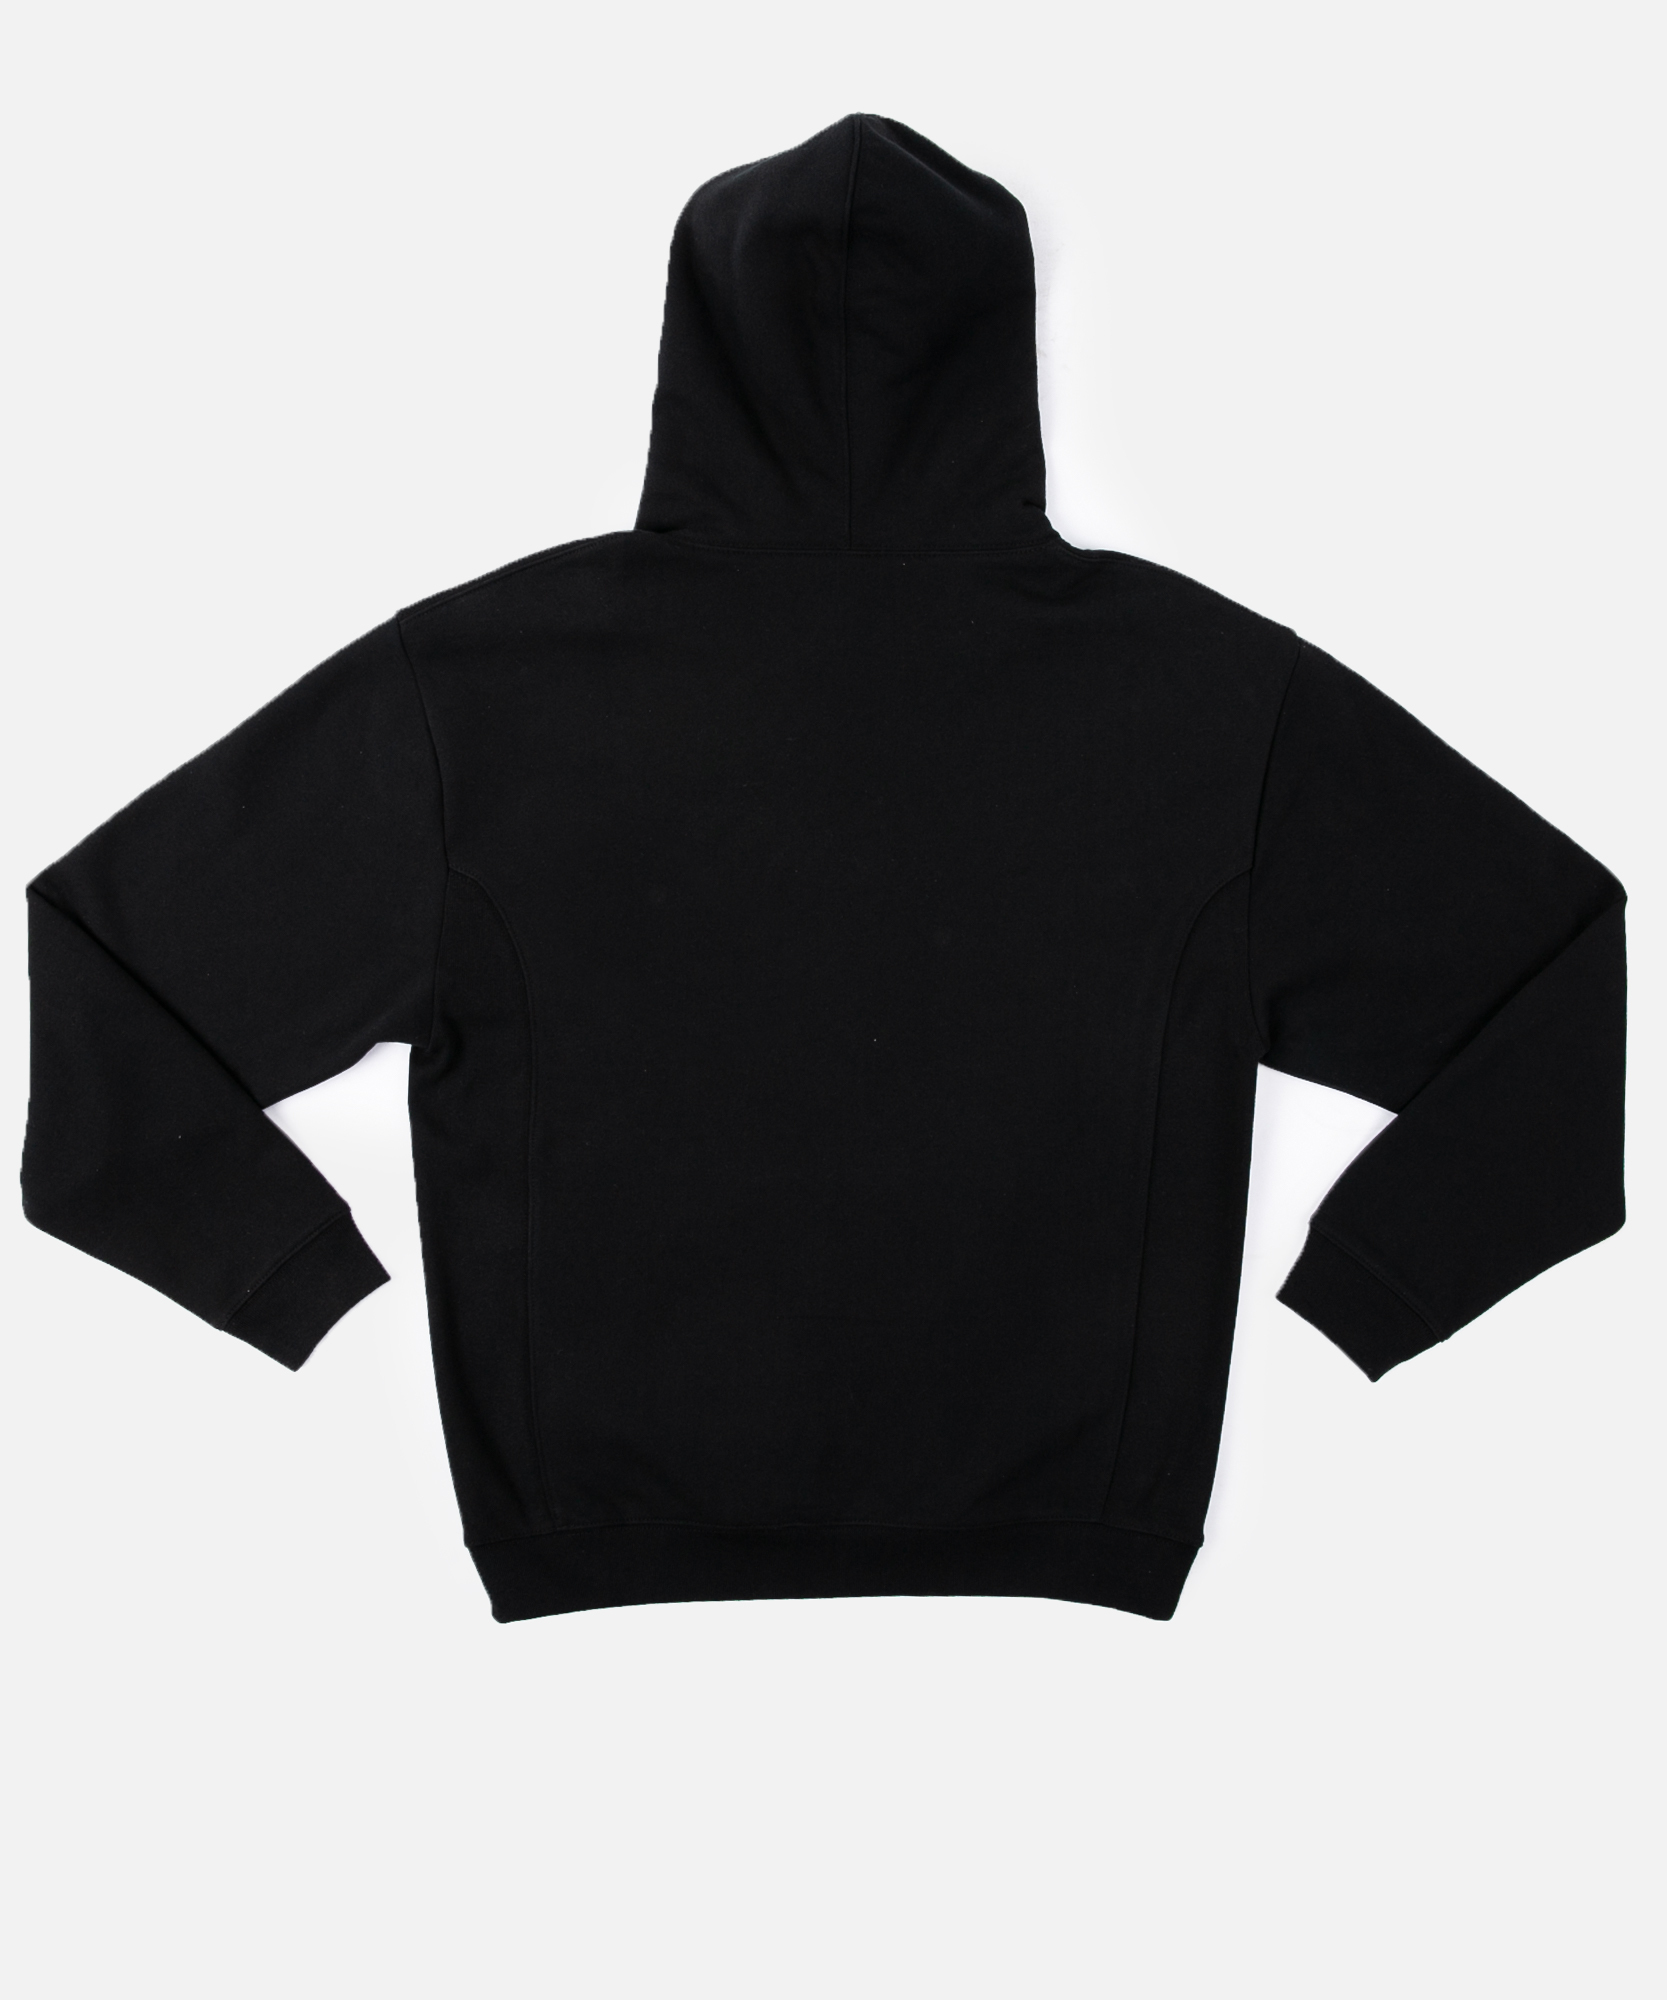 Dekmantel | Patta x Dekmantel 2020 Hooded Sweater